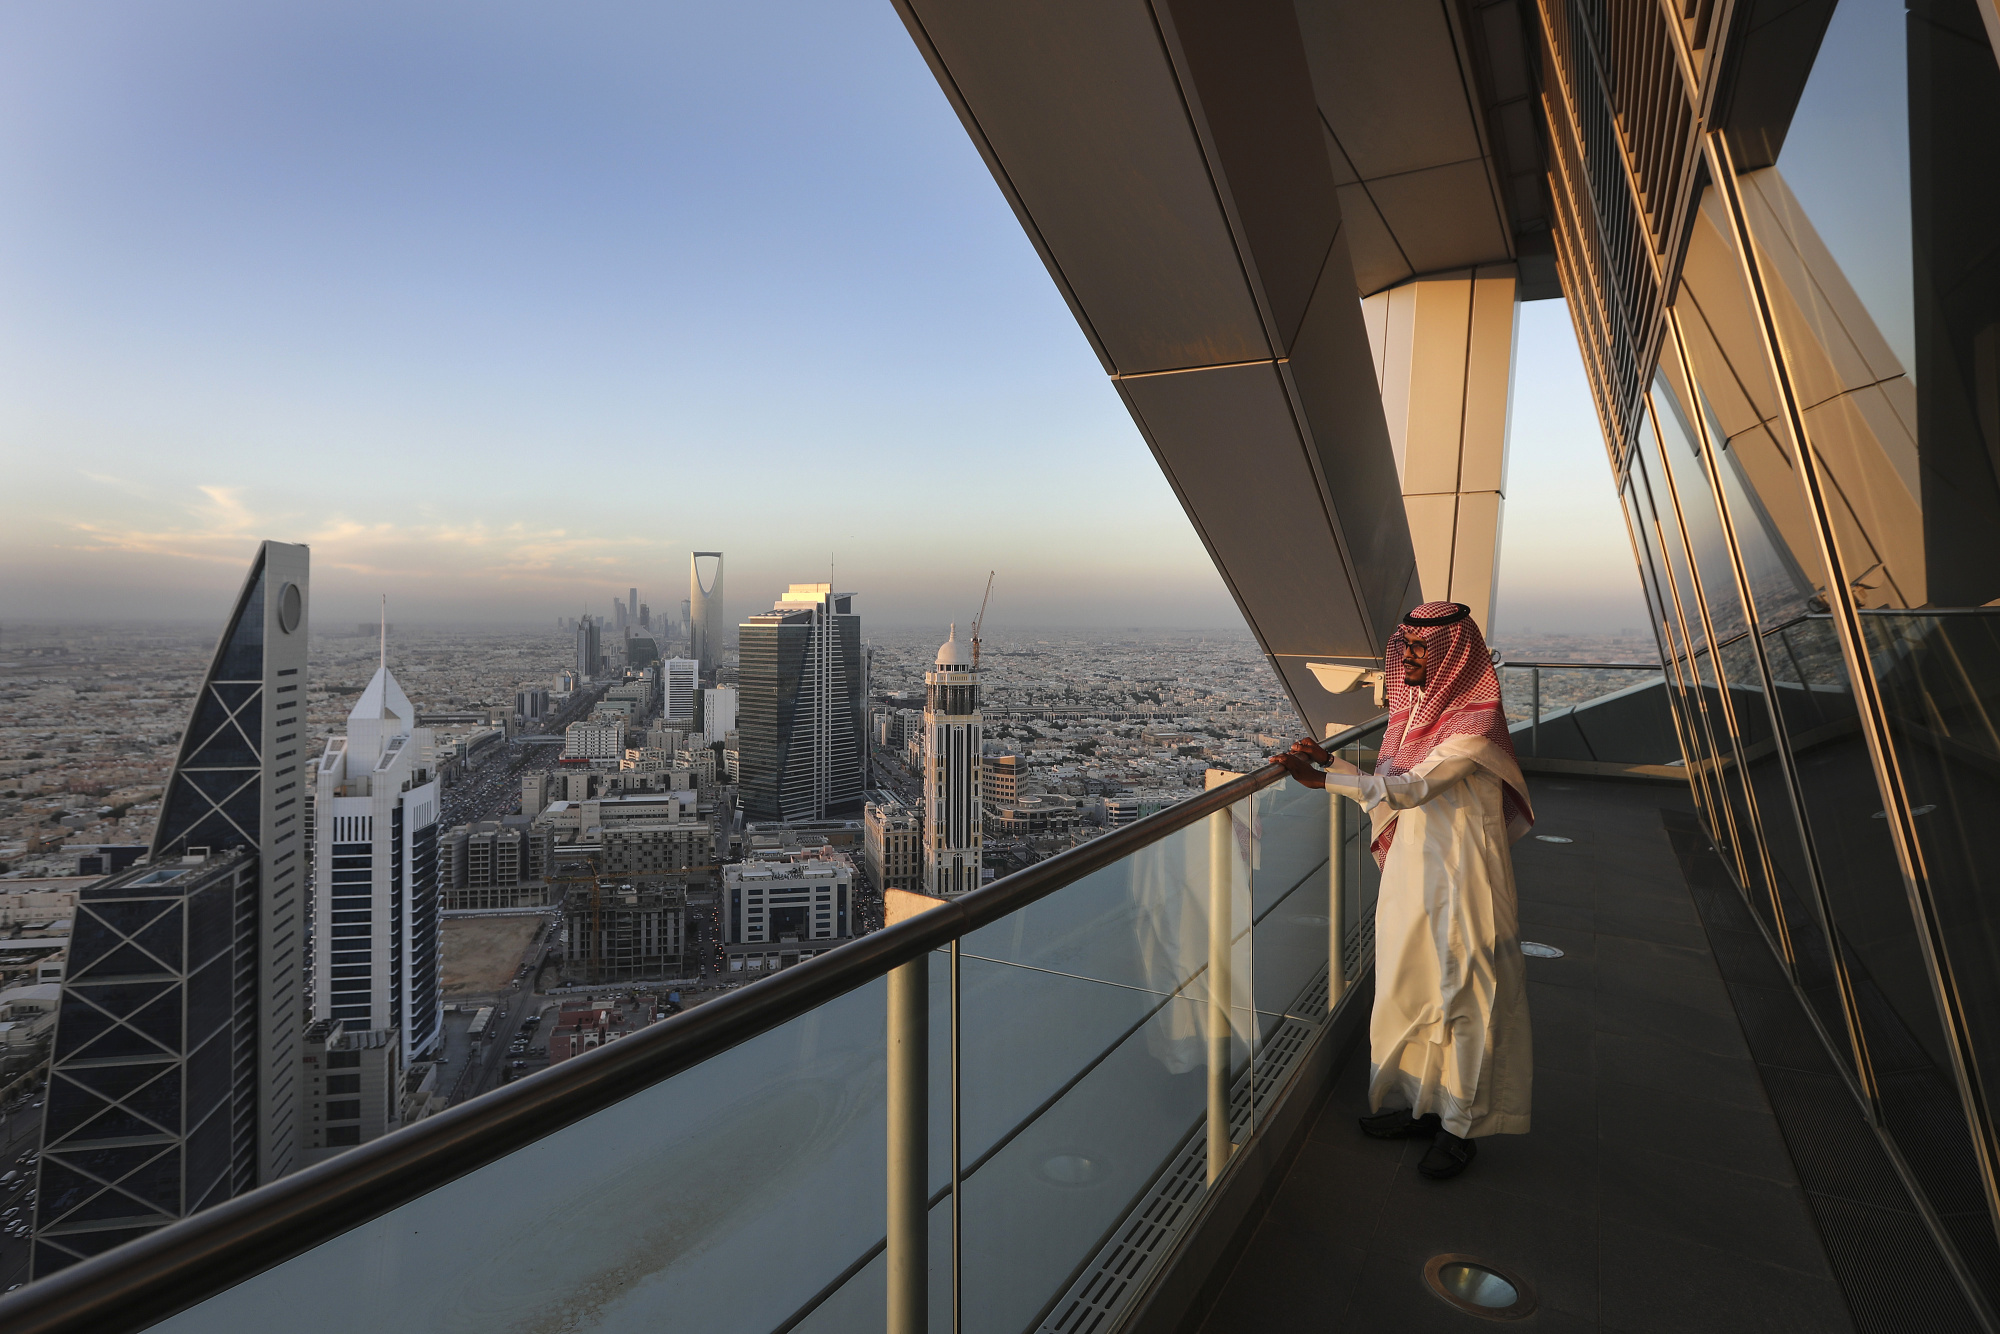 Saudi Arabia's $500 Billion Megacity Dream Clashes With Reality